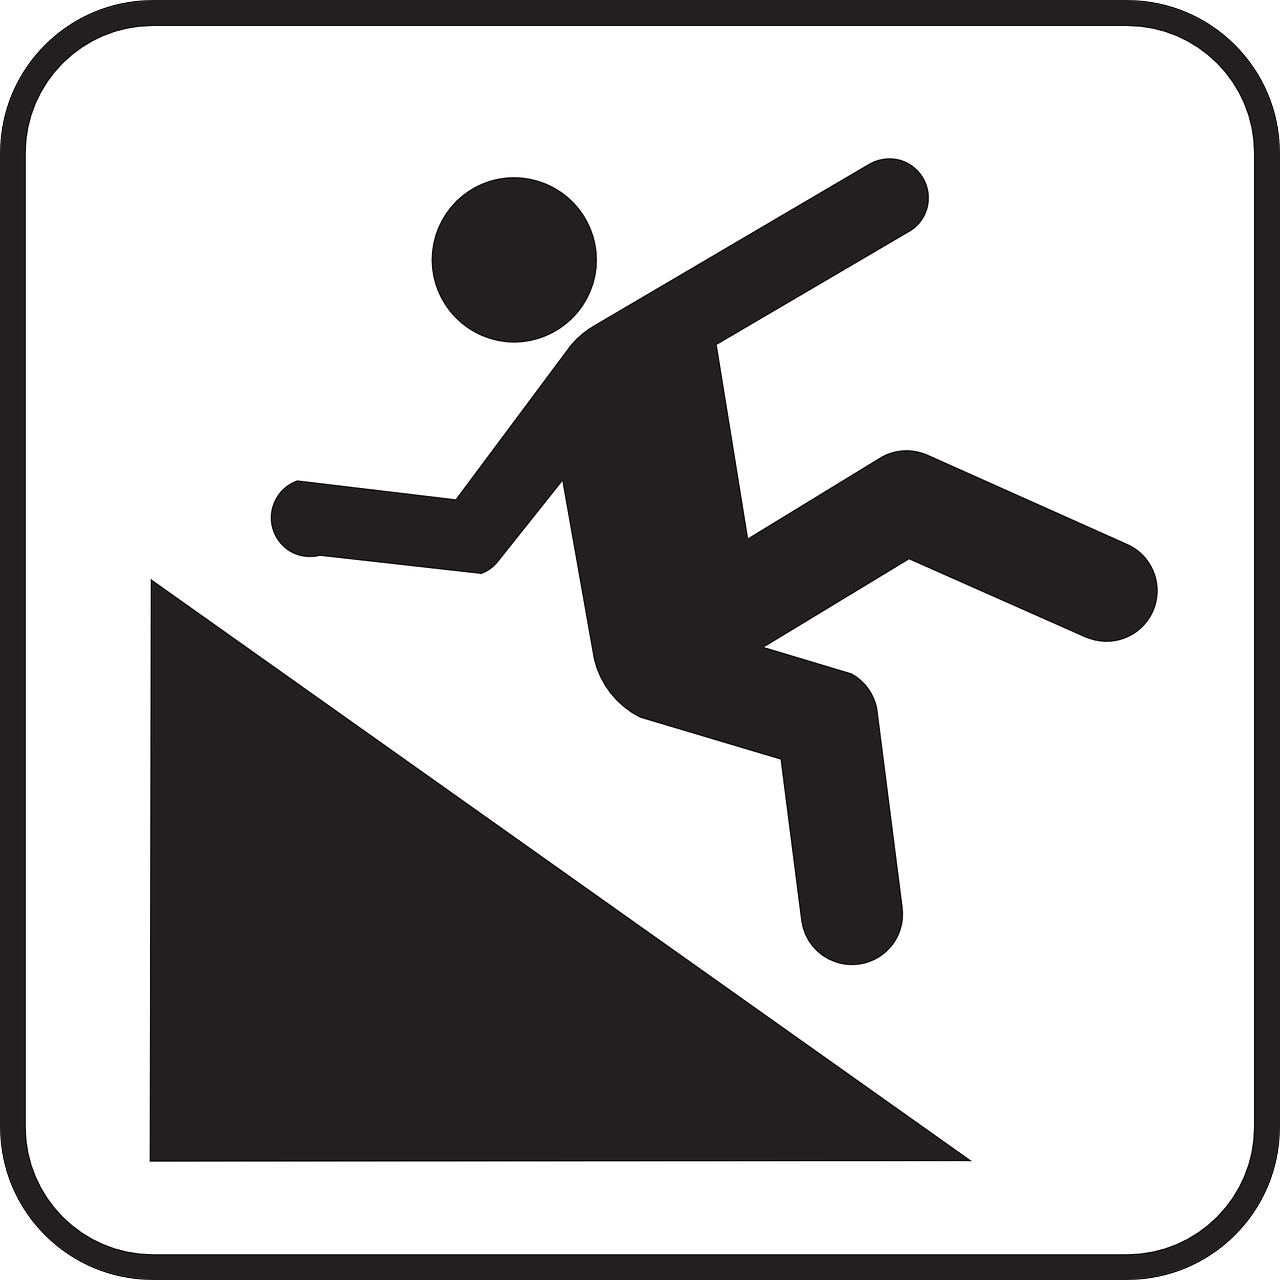 Falling Stick figure on slope